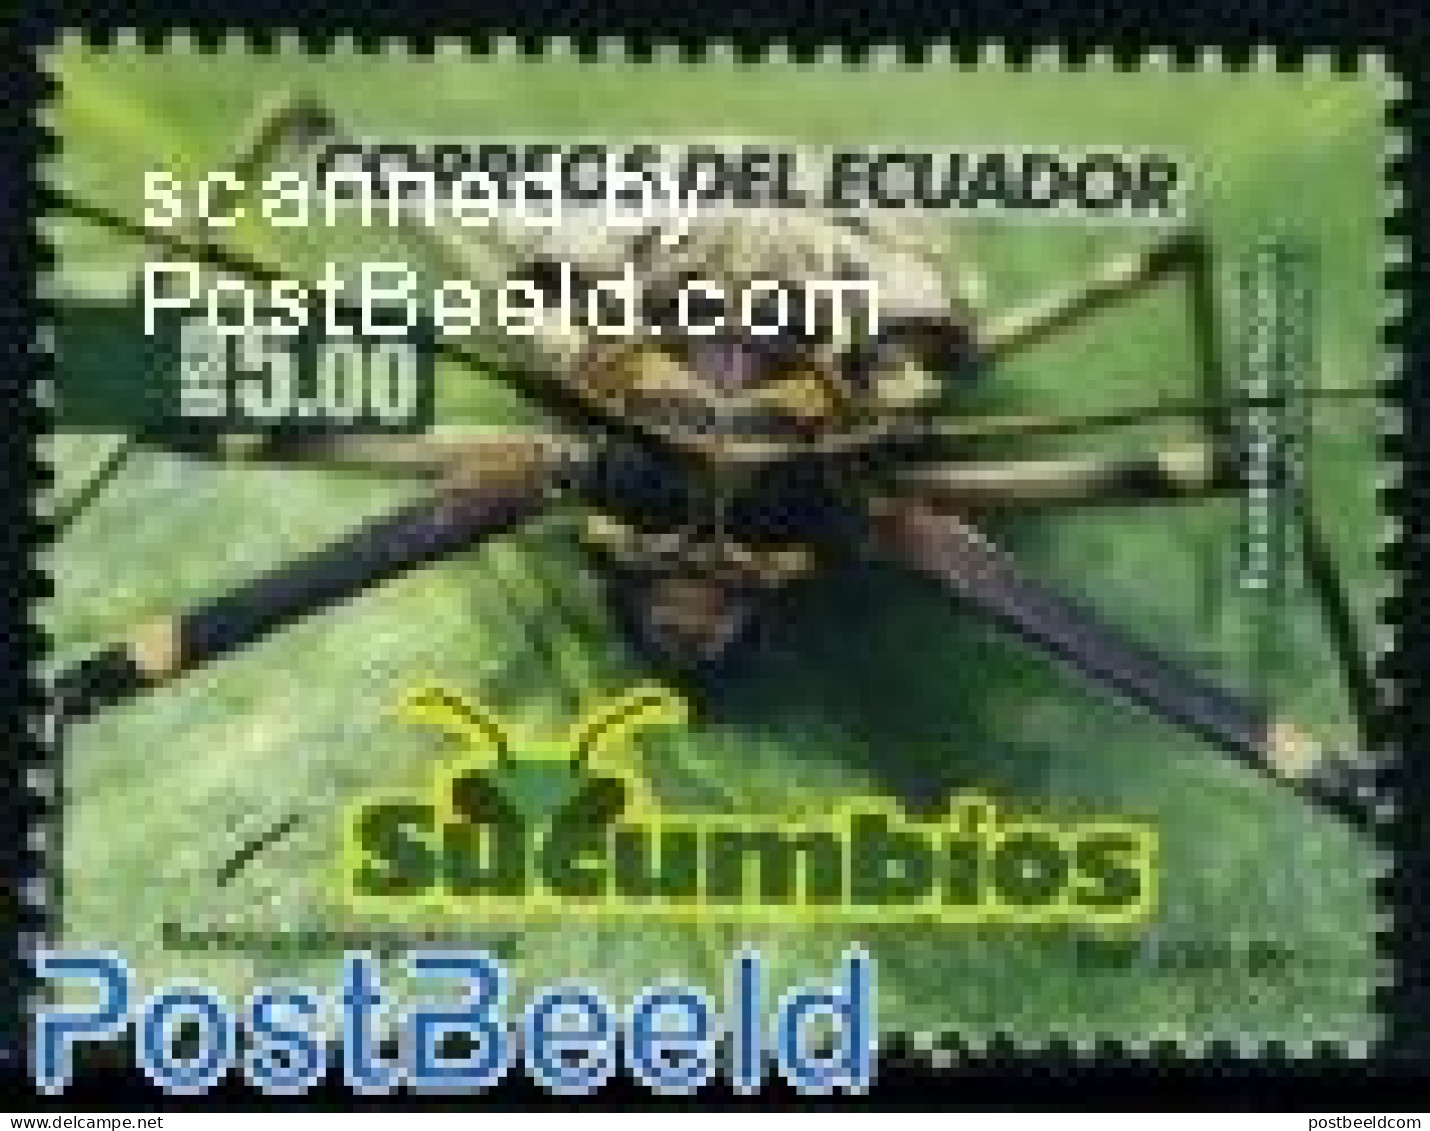 Ecuador 2009 Sucumbios Province 1v, Mint NH, Nature - Insects - Equateur